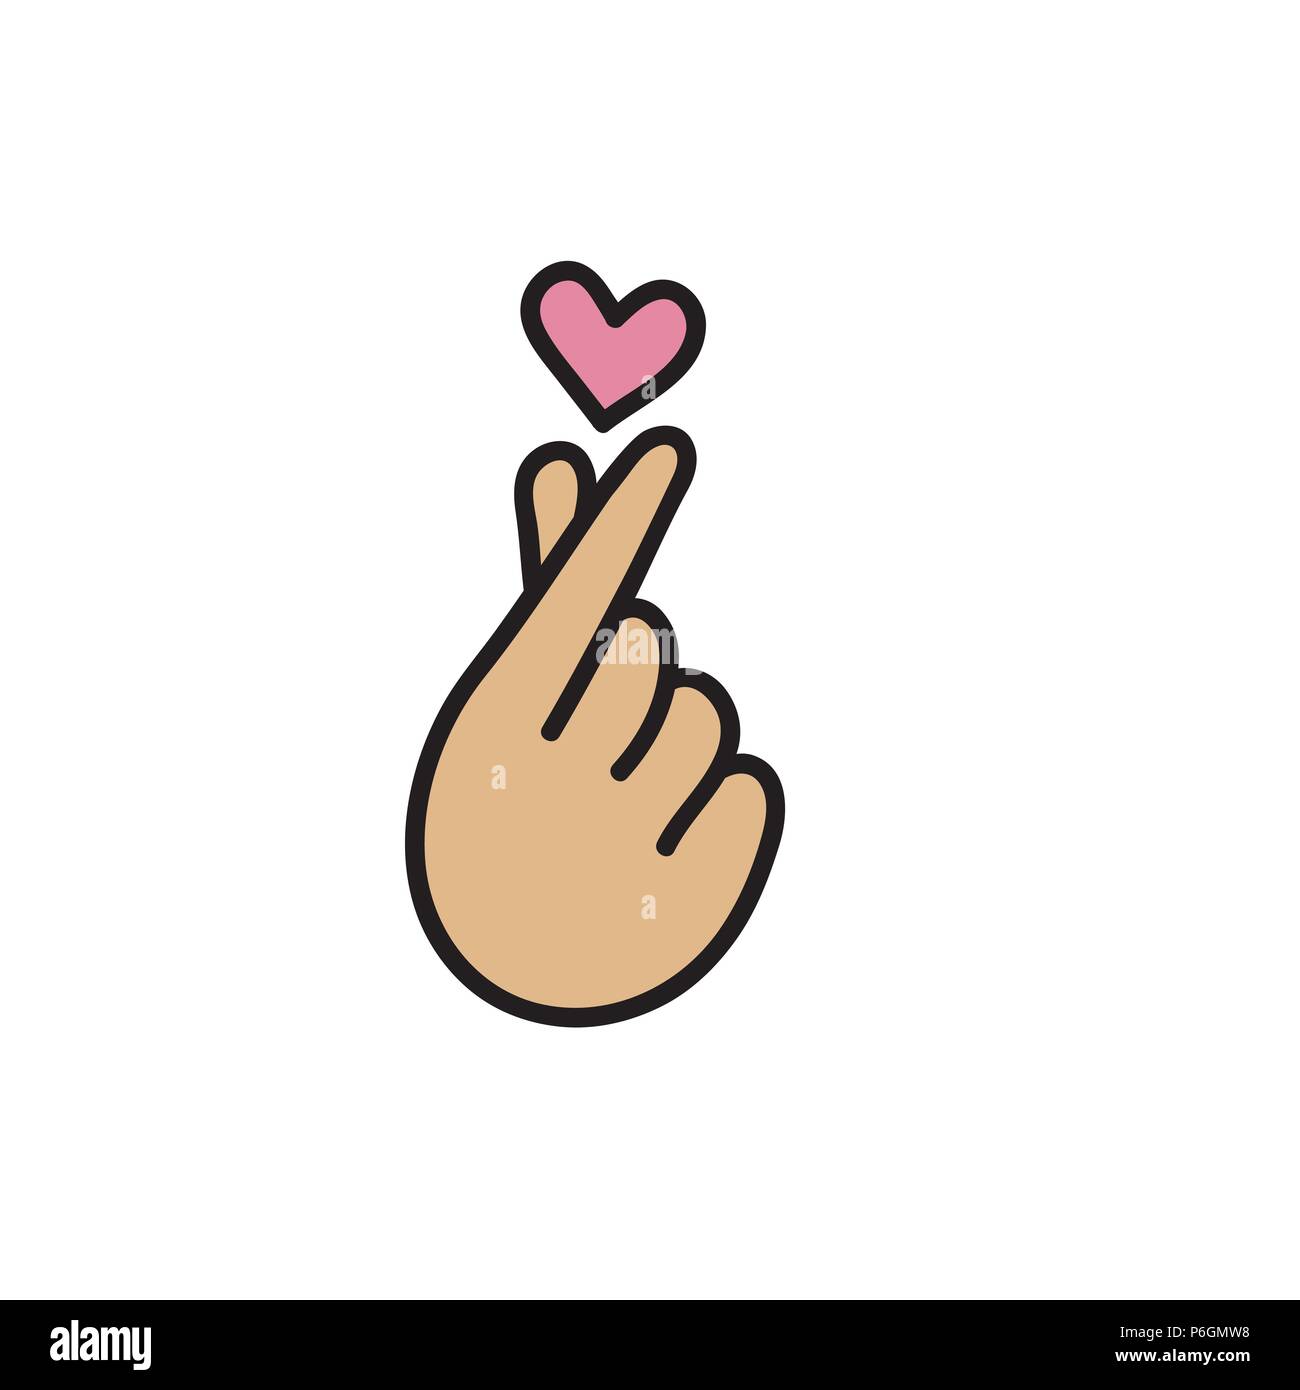 Korean heart, love symbol, fingers make small heart, love icon ...